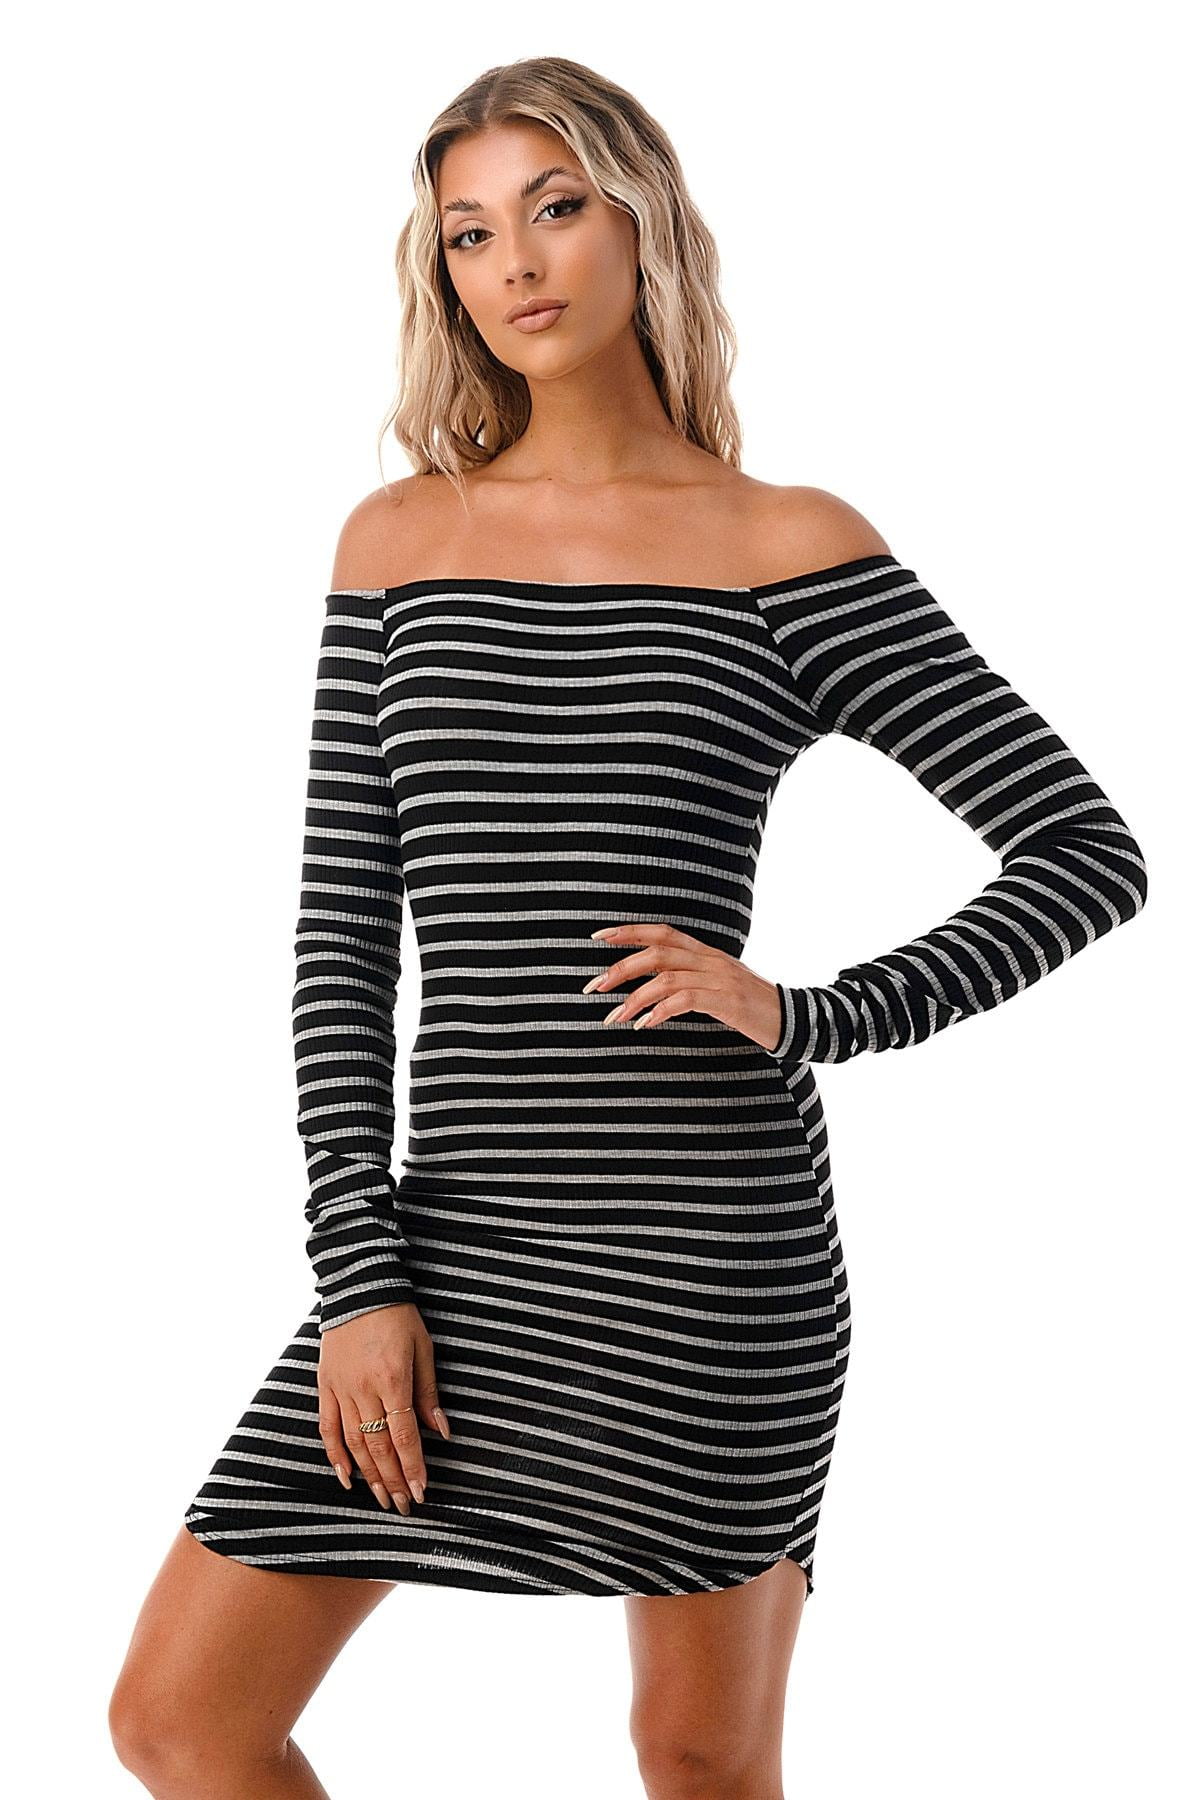 Strapless Tight Dress | Black & White Stripes Dress | Off Shoulder ...